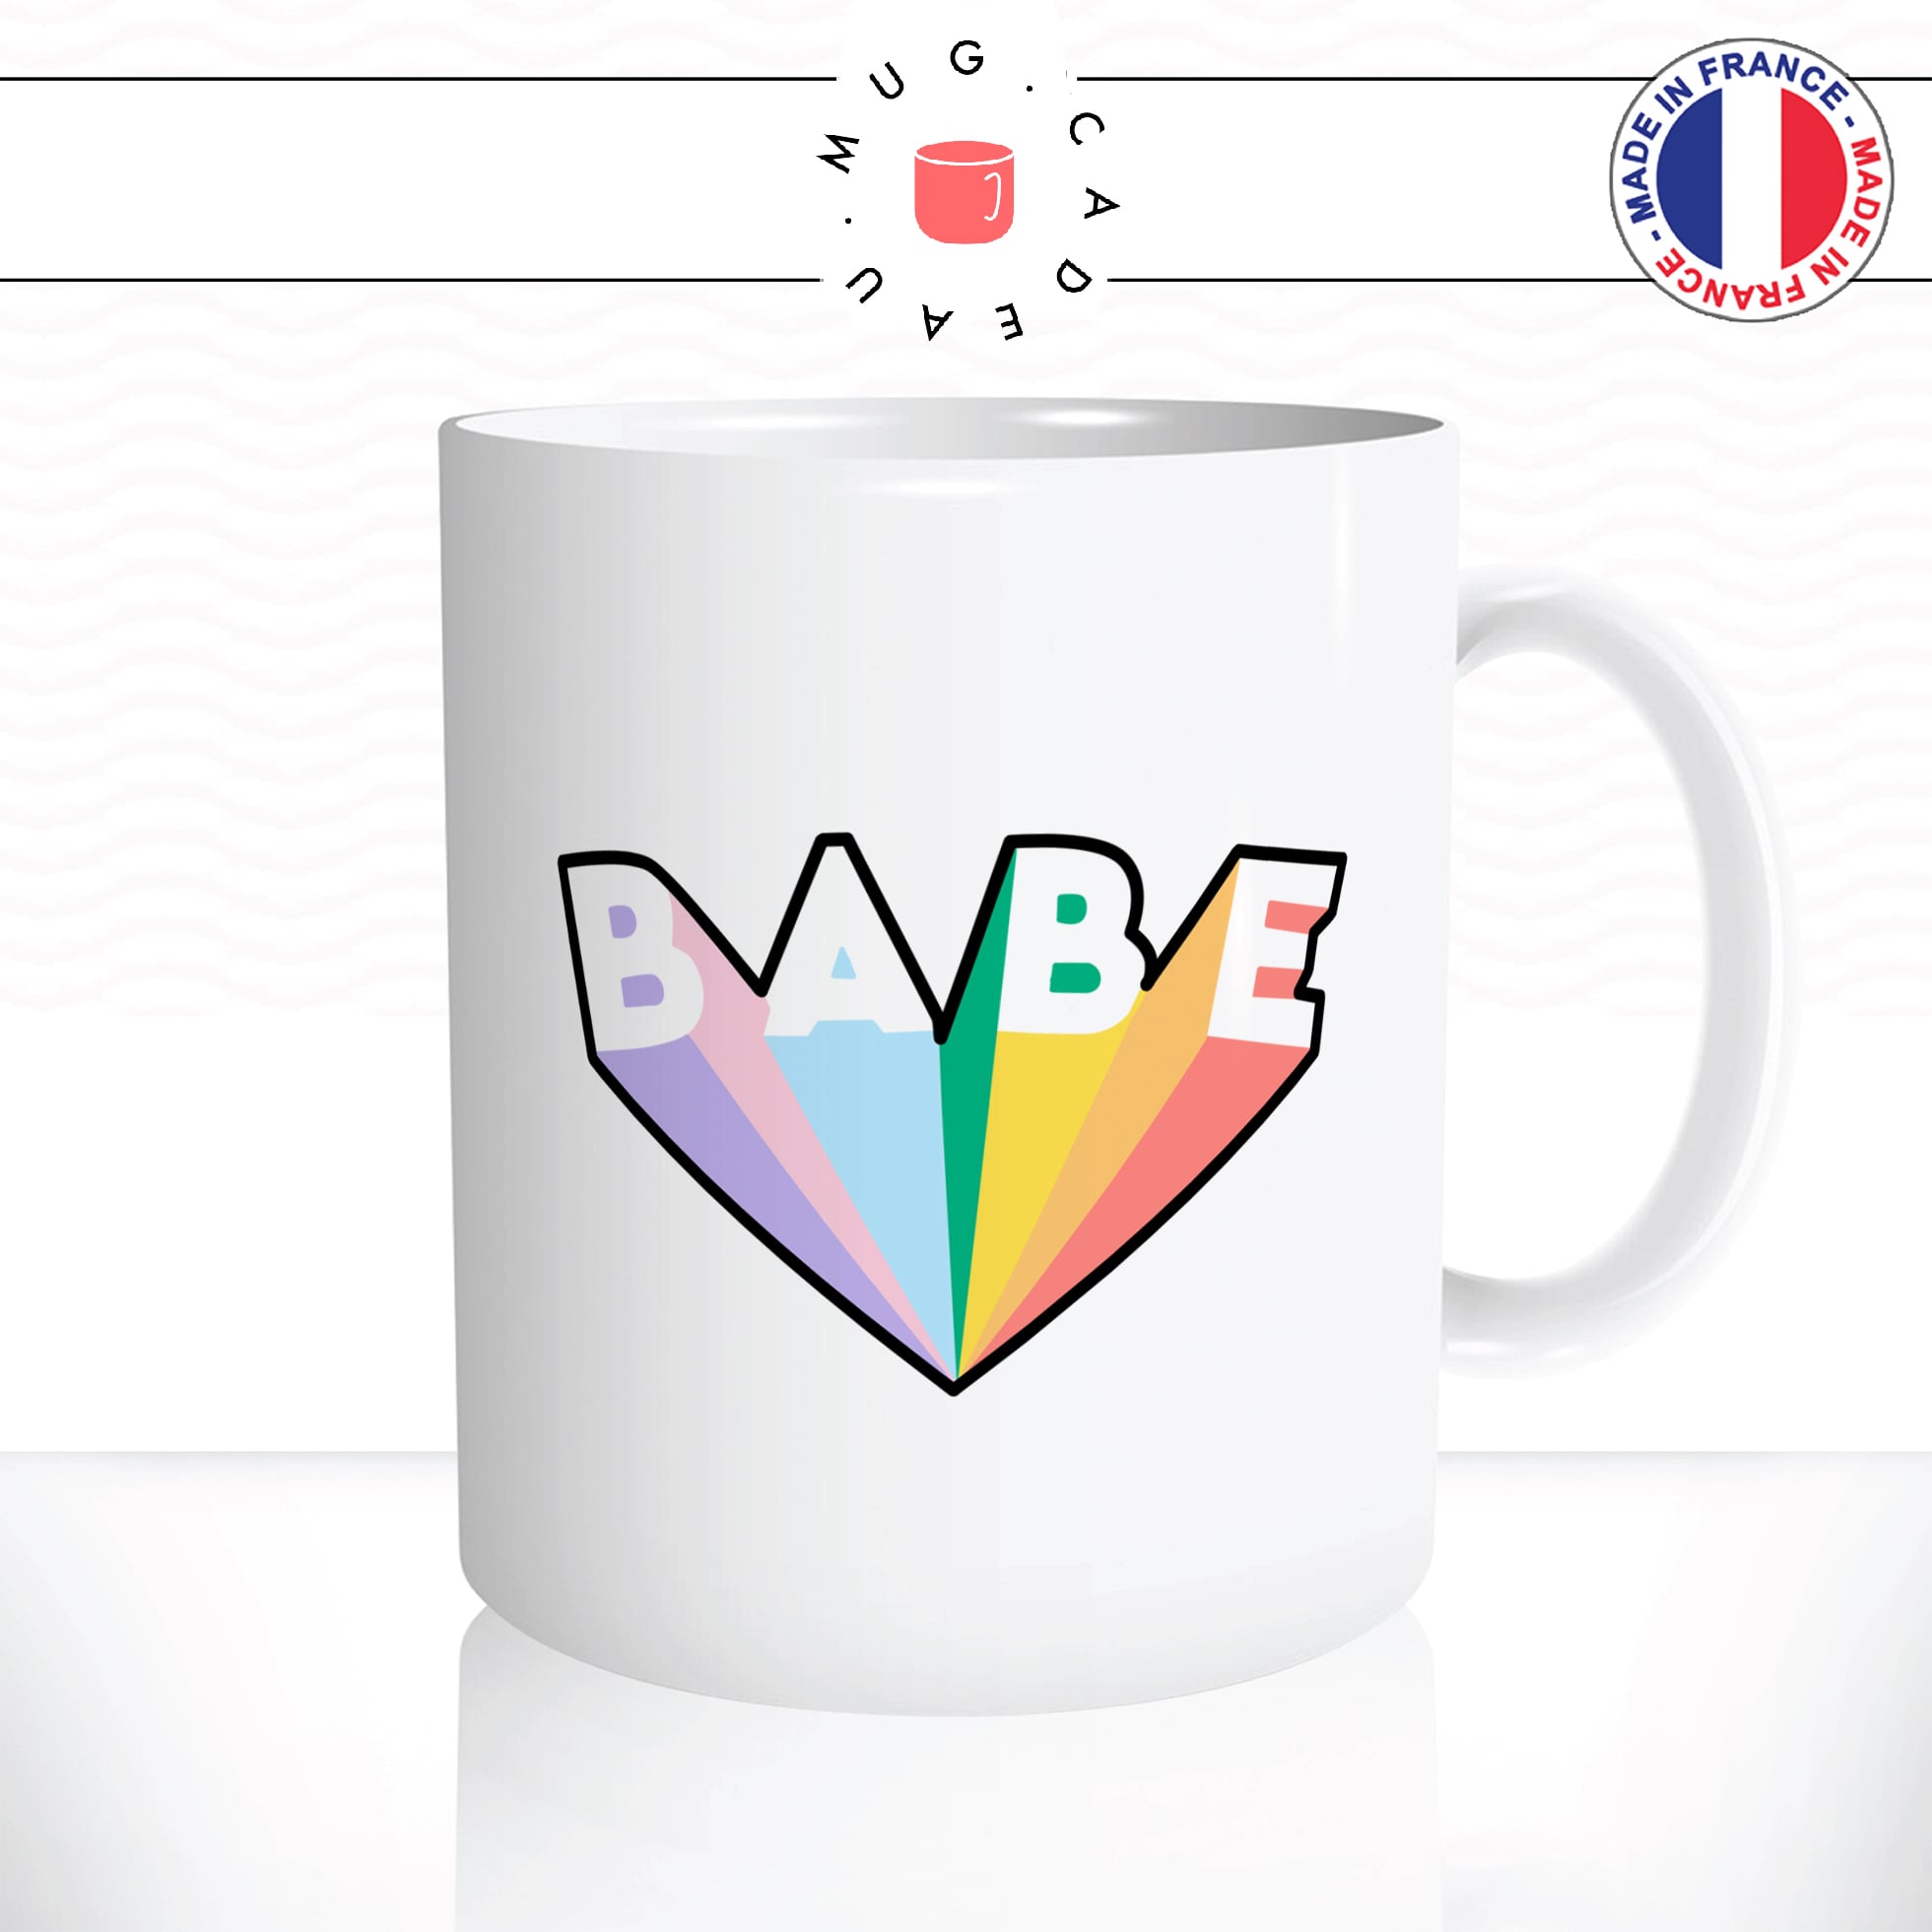 mug-tasse-babe-baby-amour-couleurs-couple-aimer-amoureuix-mignon-dessin-idee-cadeau-original-1